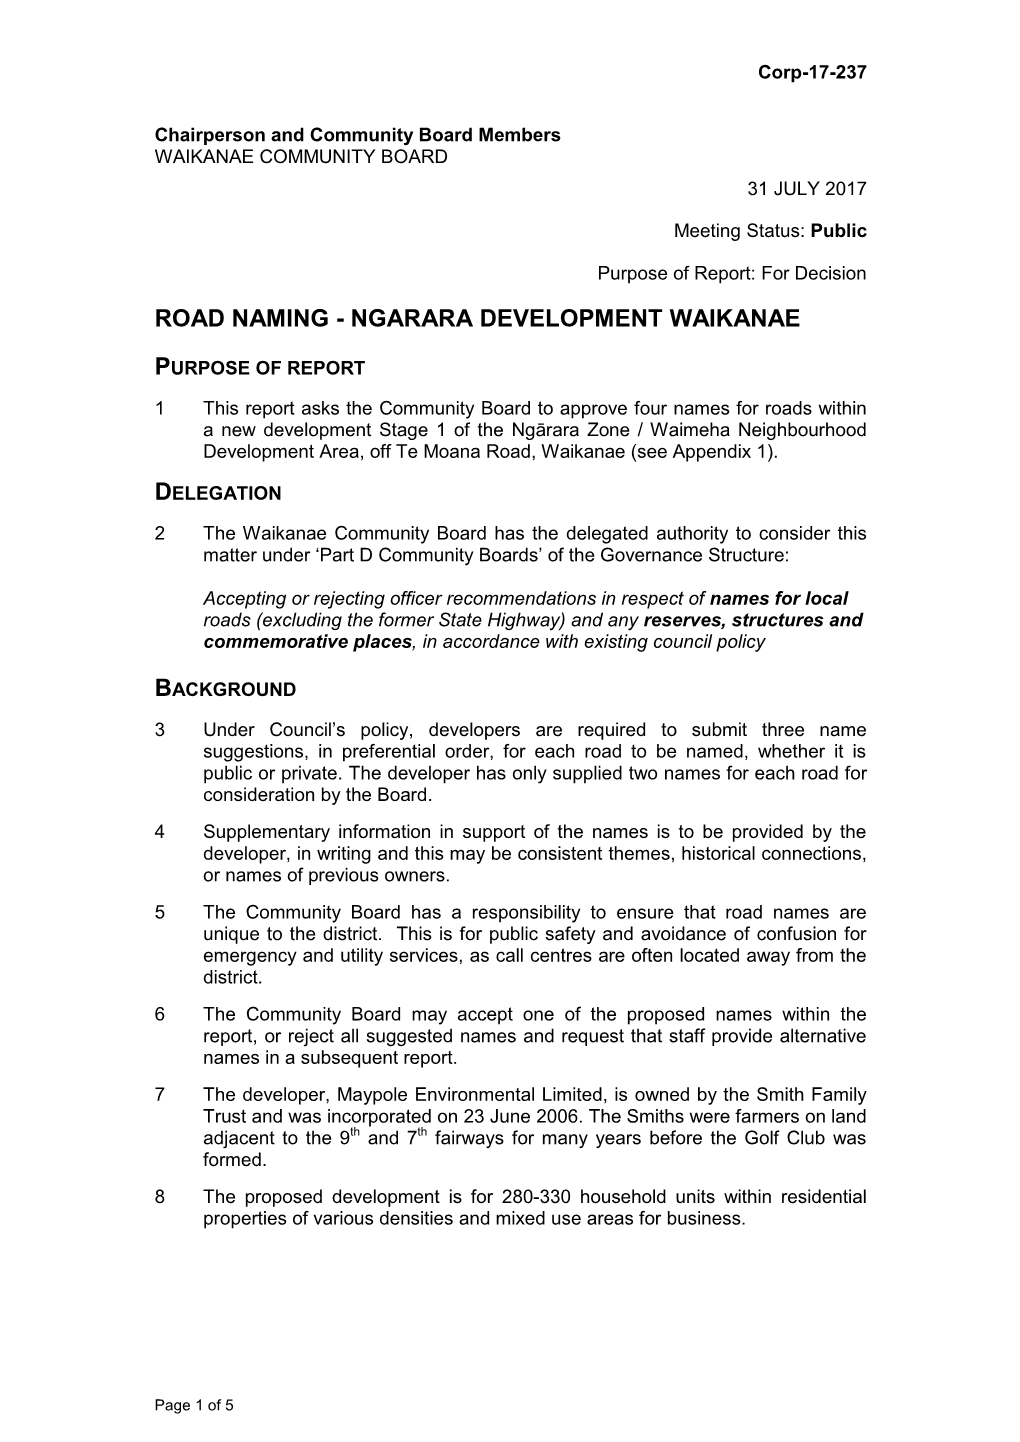 Road Naming - Ngarara Development Waikanae